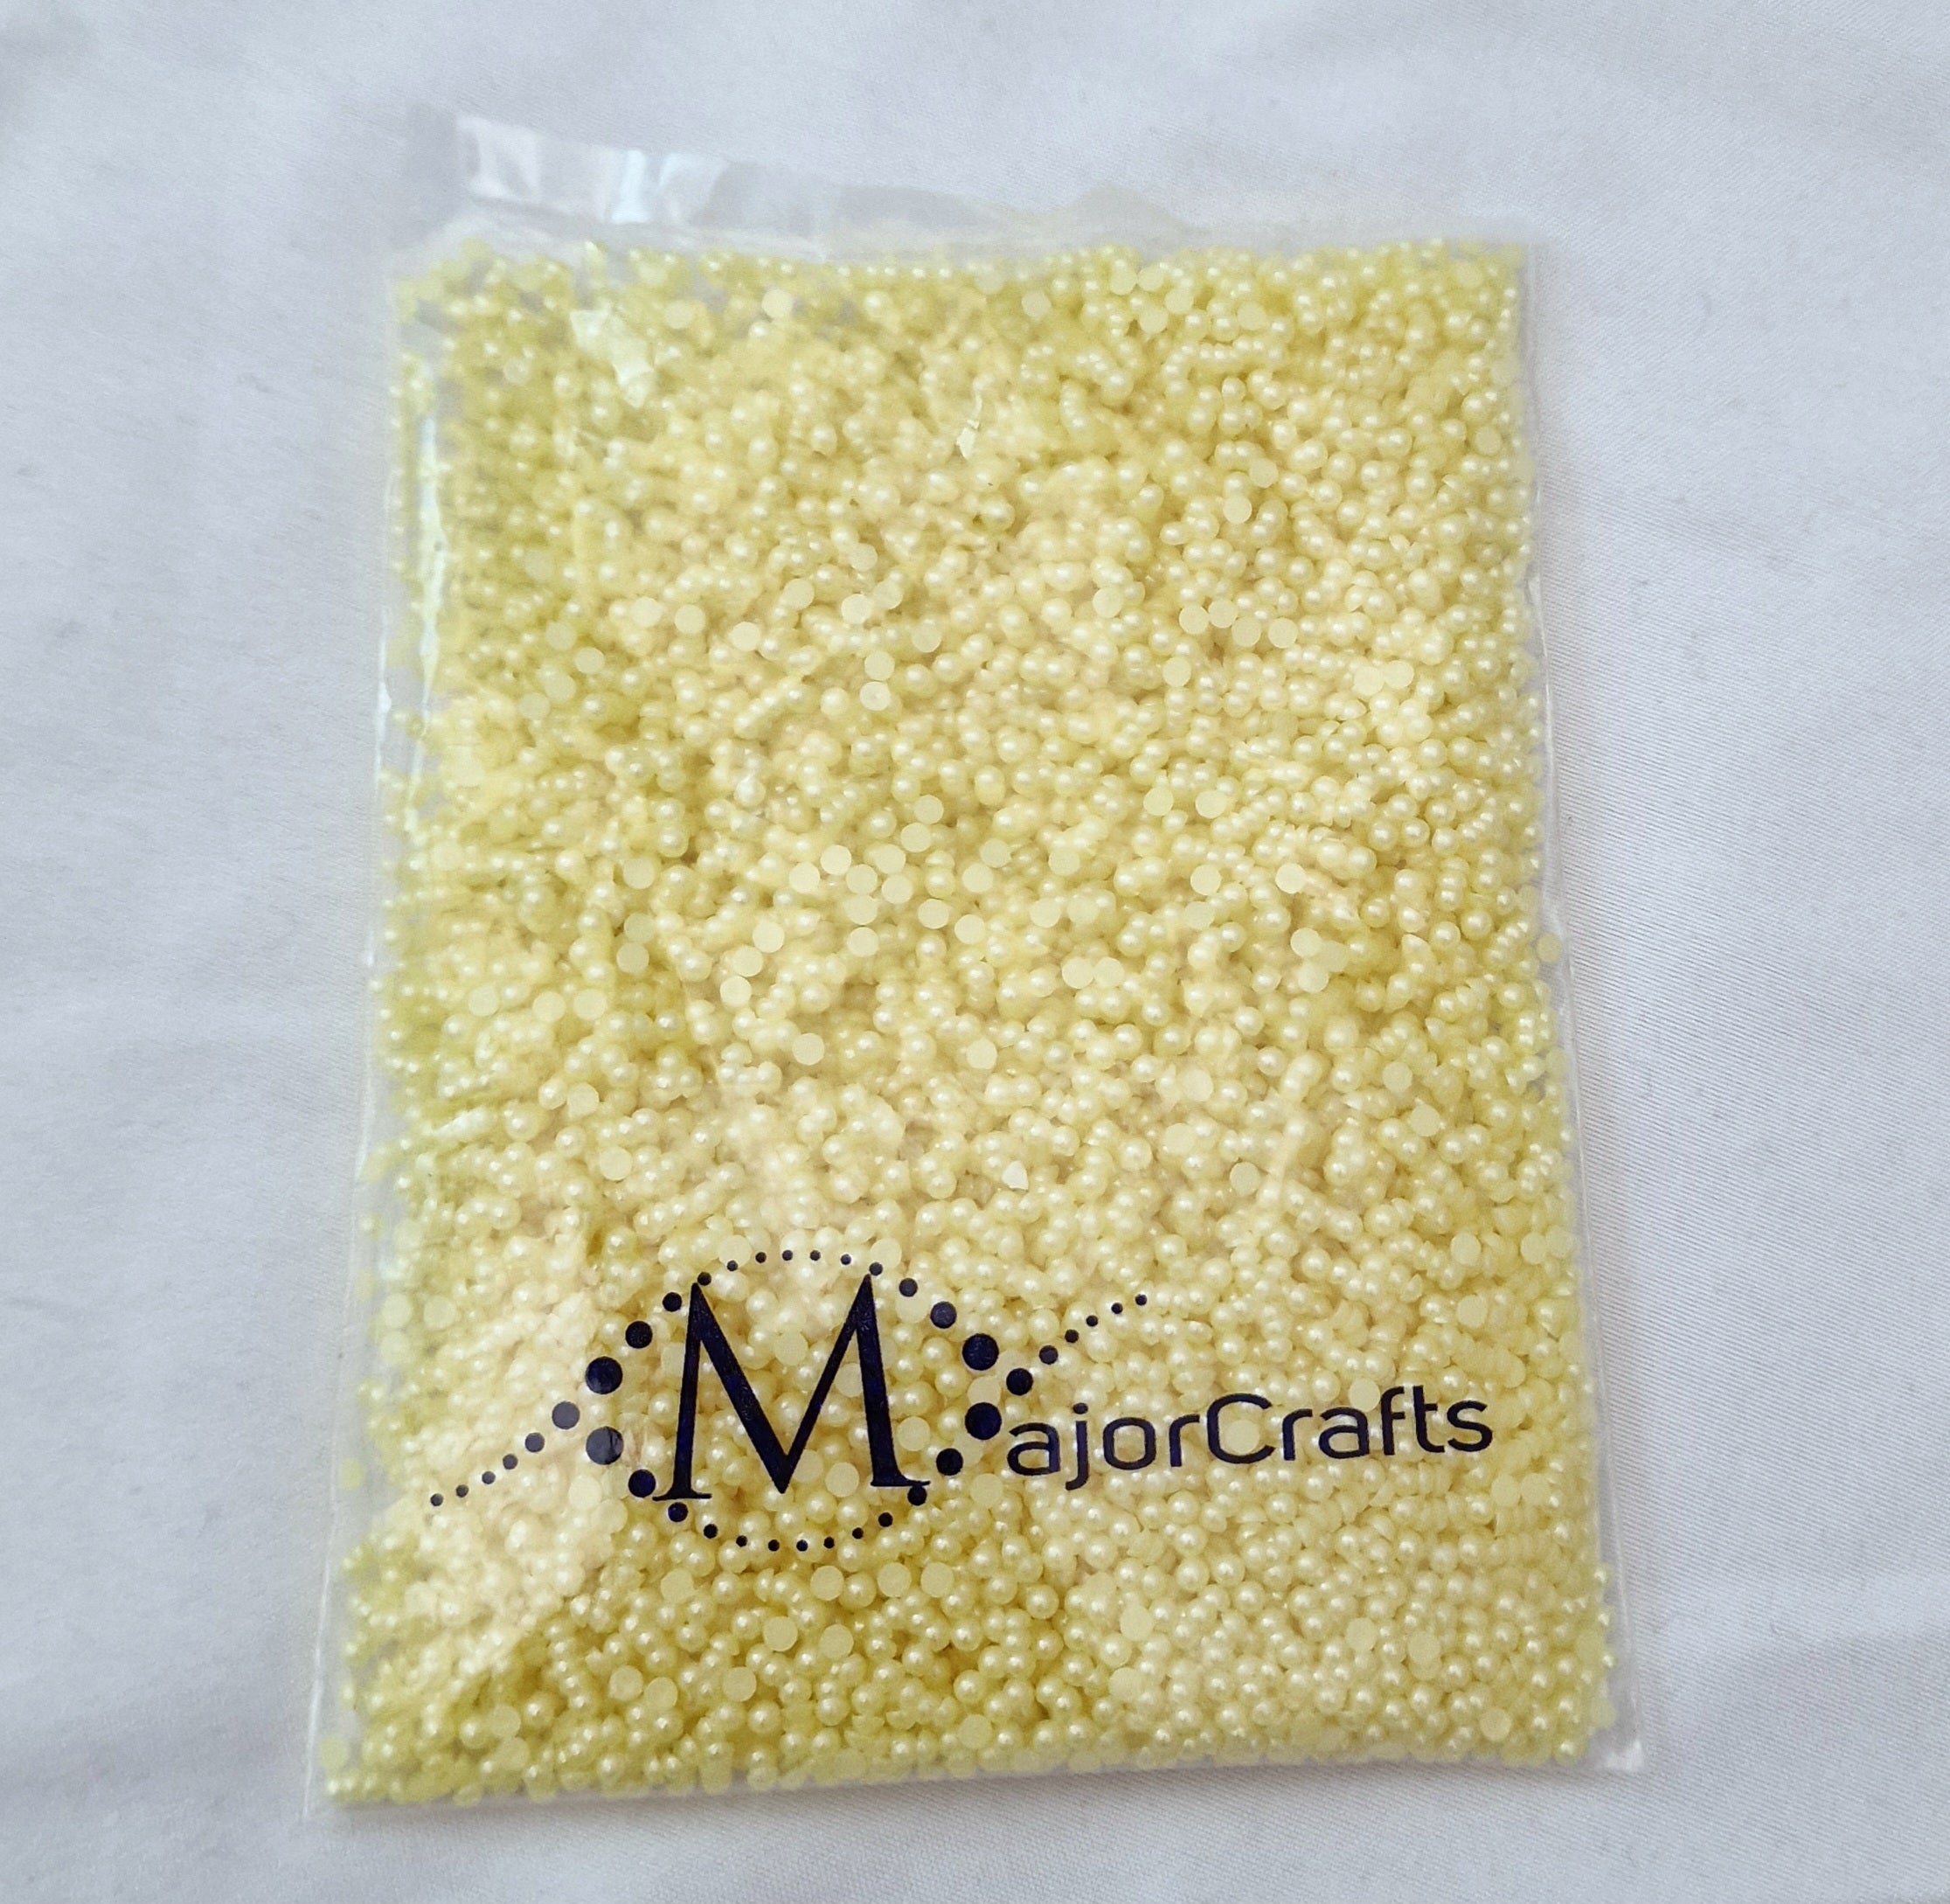 MajorCrafts Light Yellow Flat Back Half Round Resin Embellishment Pearls C32